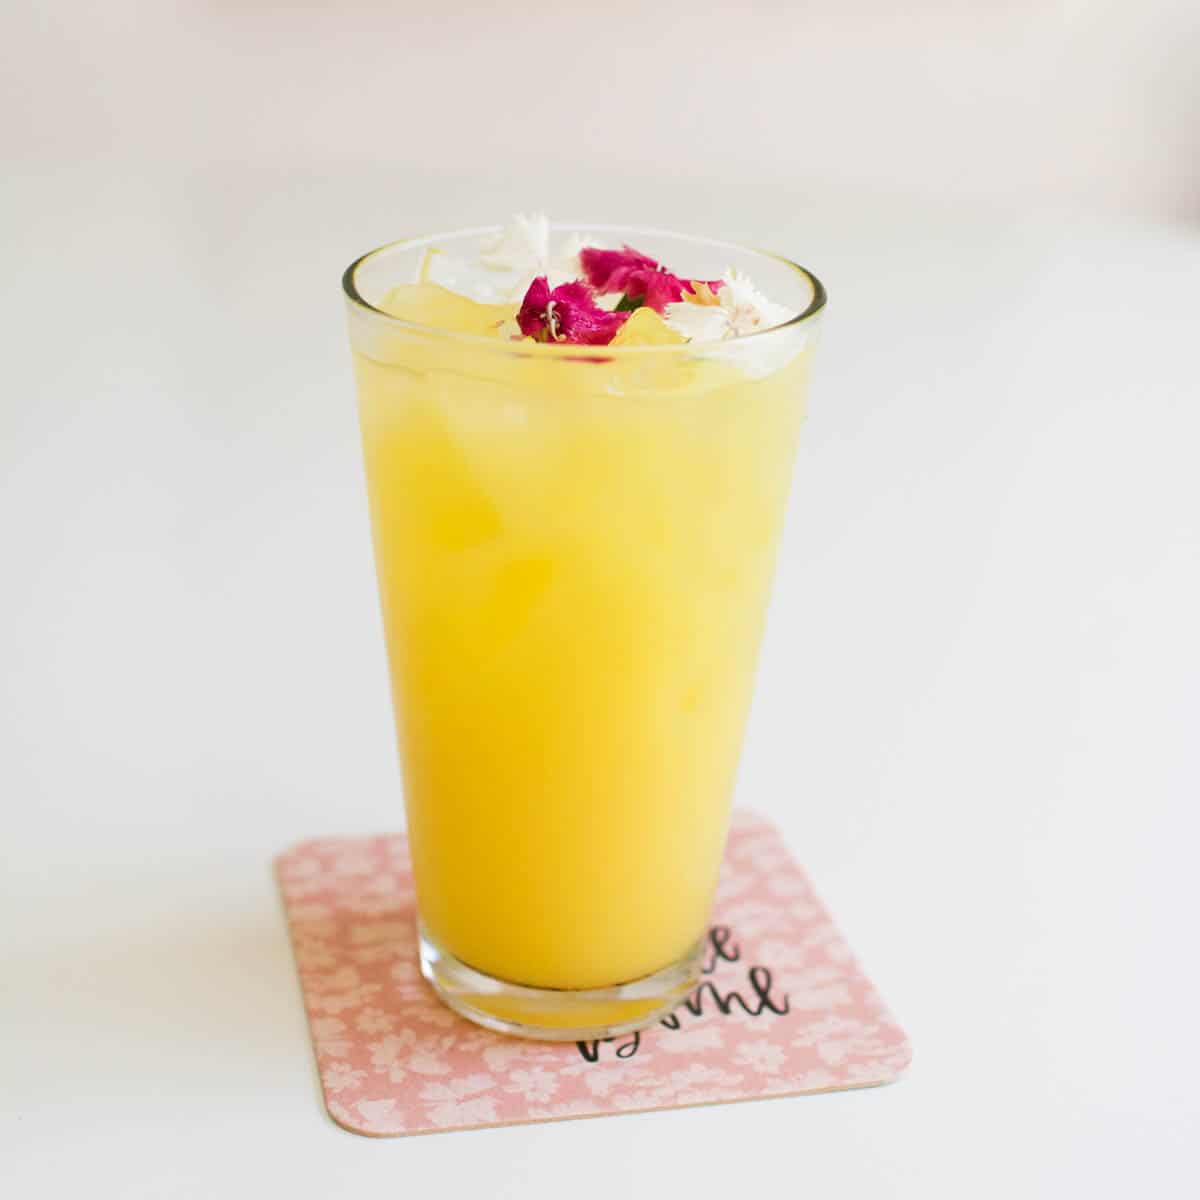 https://www.cupcakesandcutlery.com/wp-content/uploads/2020/01/vodka-and-orange-juice-featured-image-1.jpg